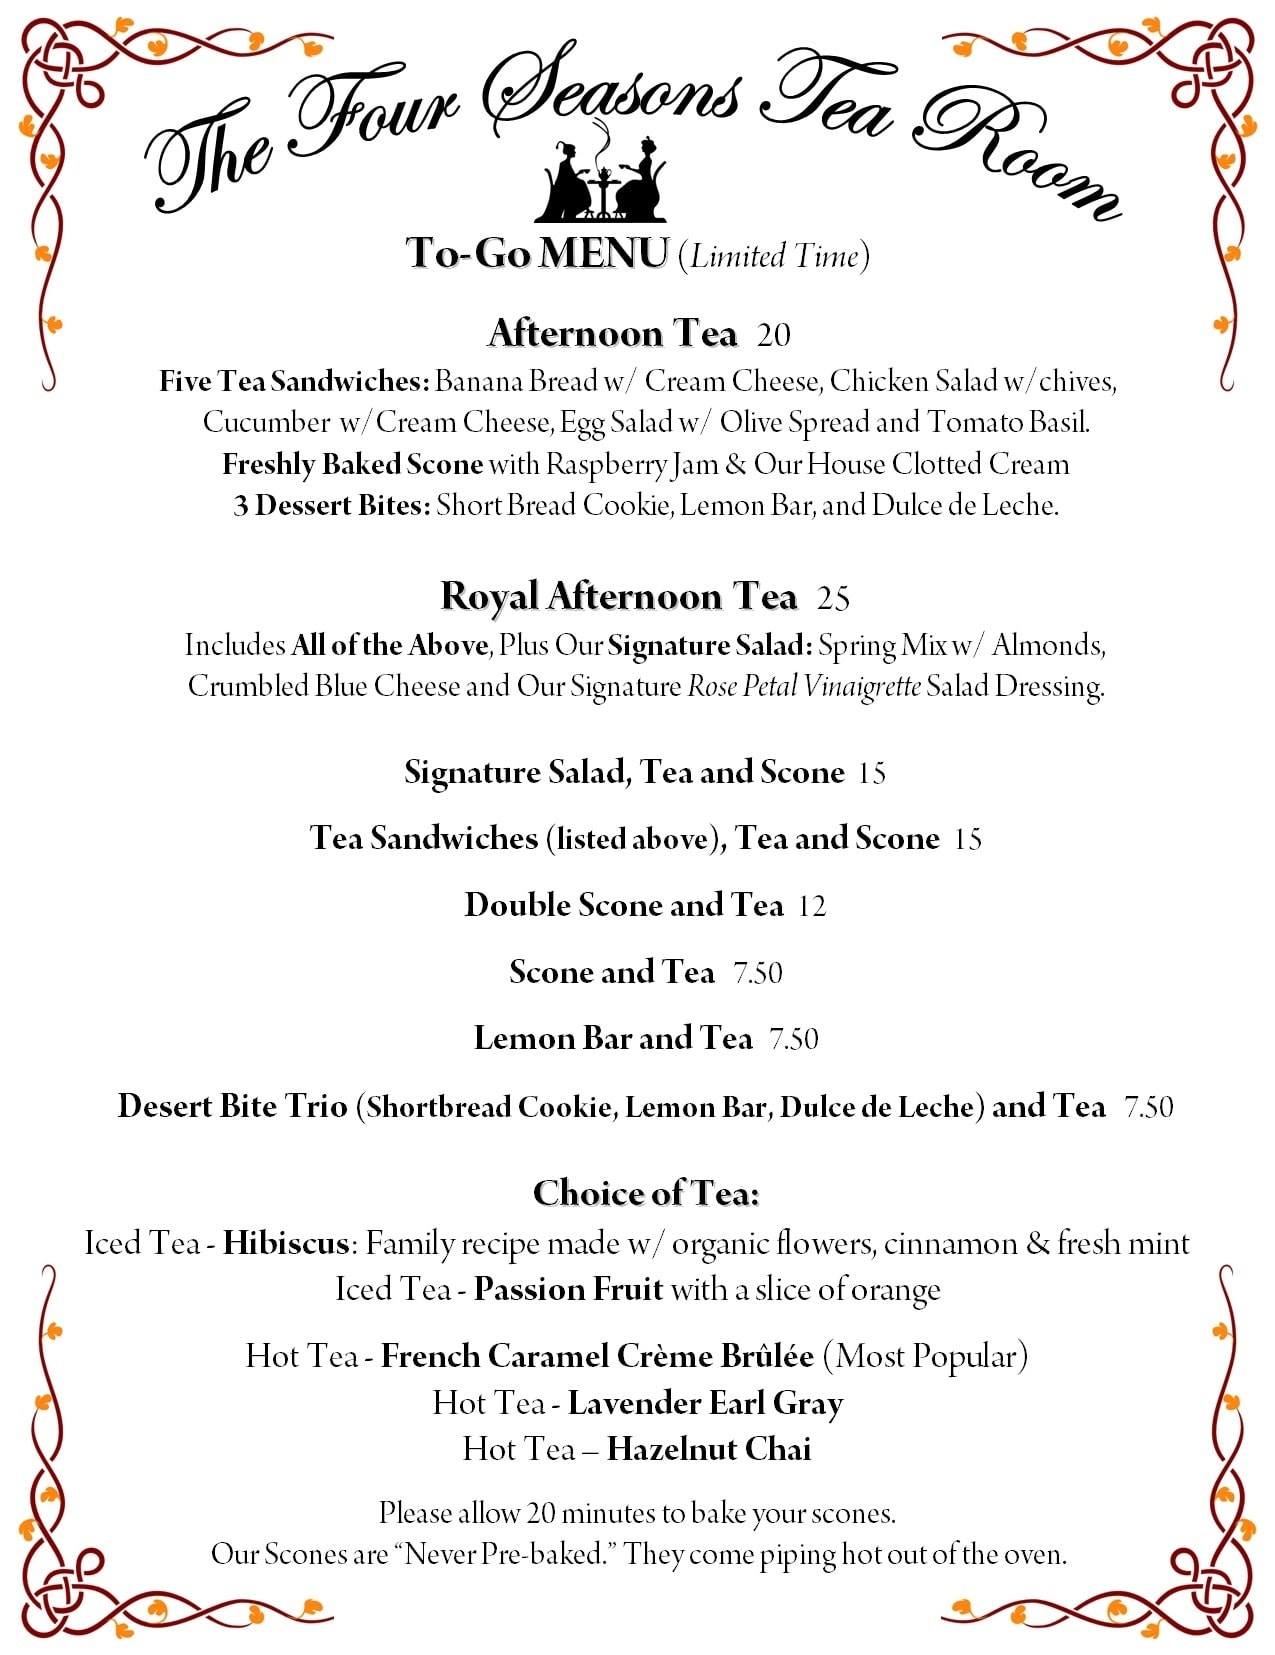 Four Seasons Tea Room menu